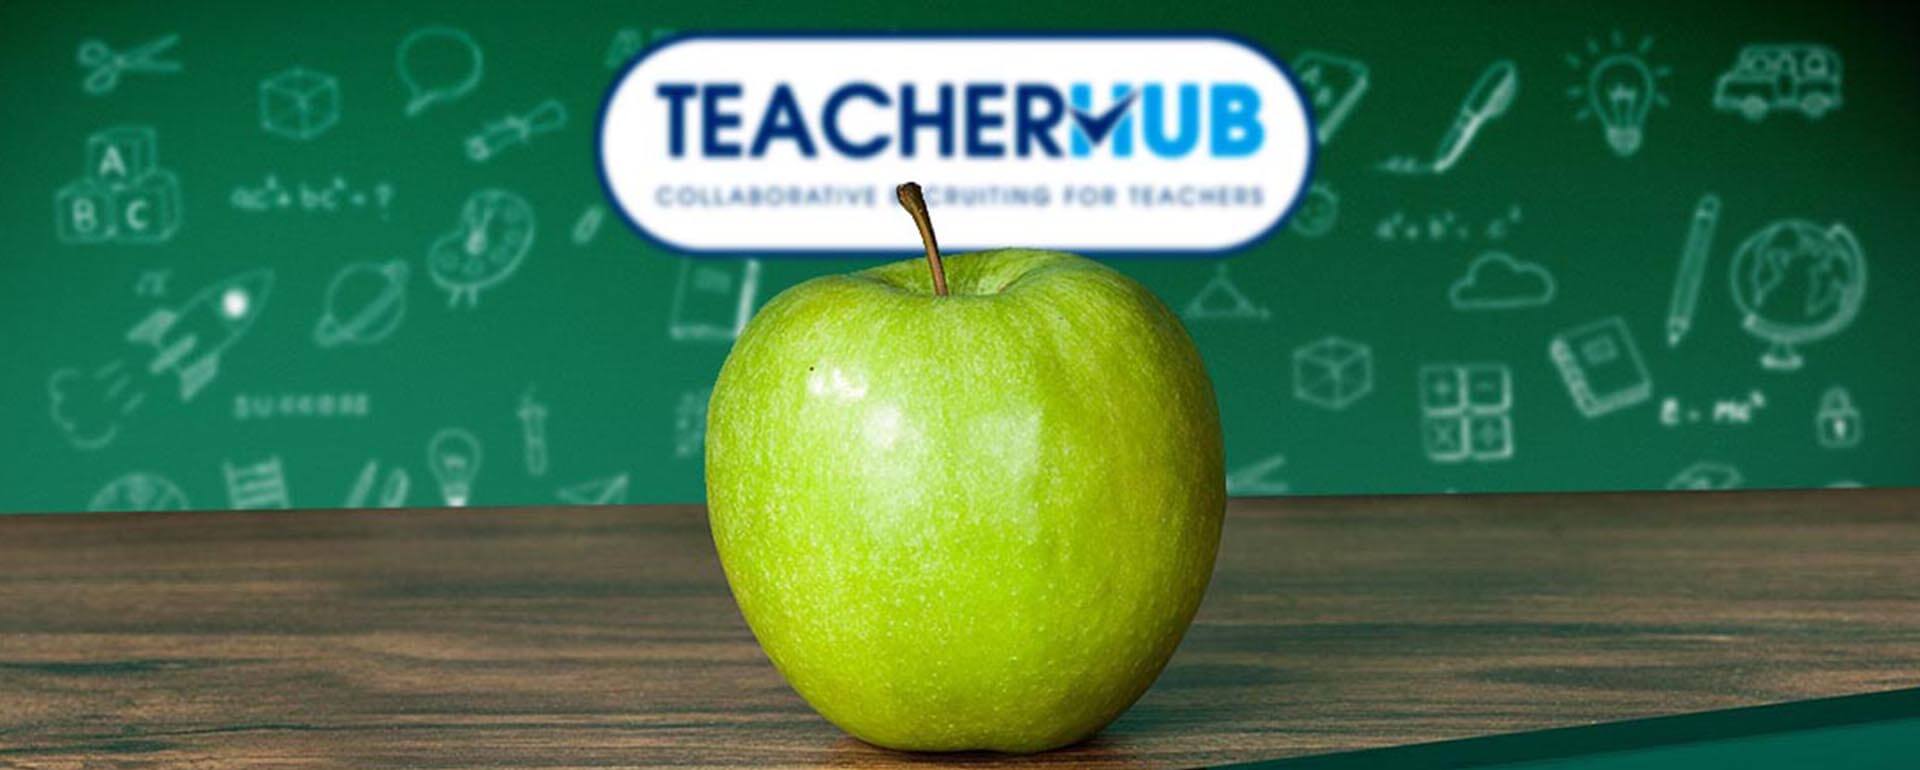 TeacherHub Top of the Class